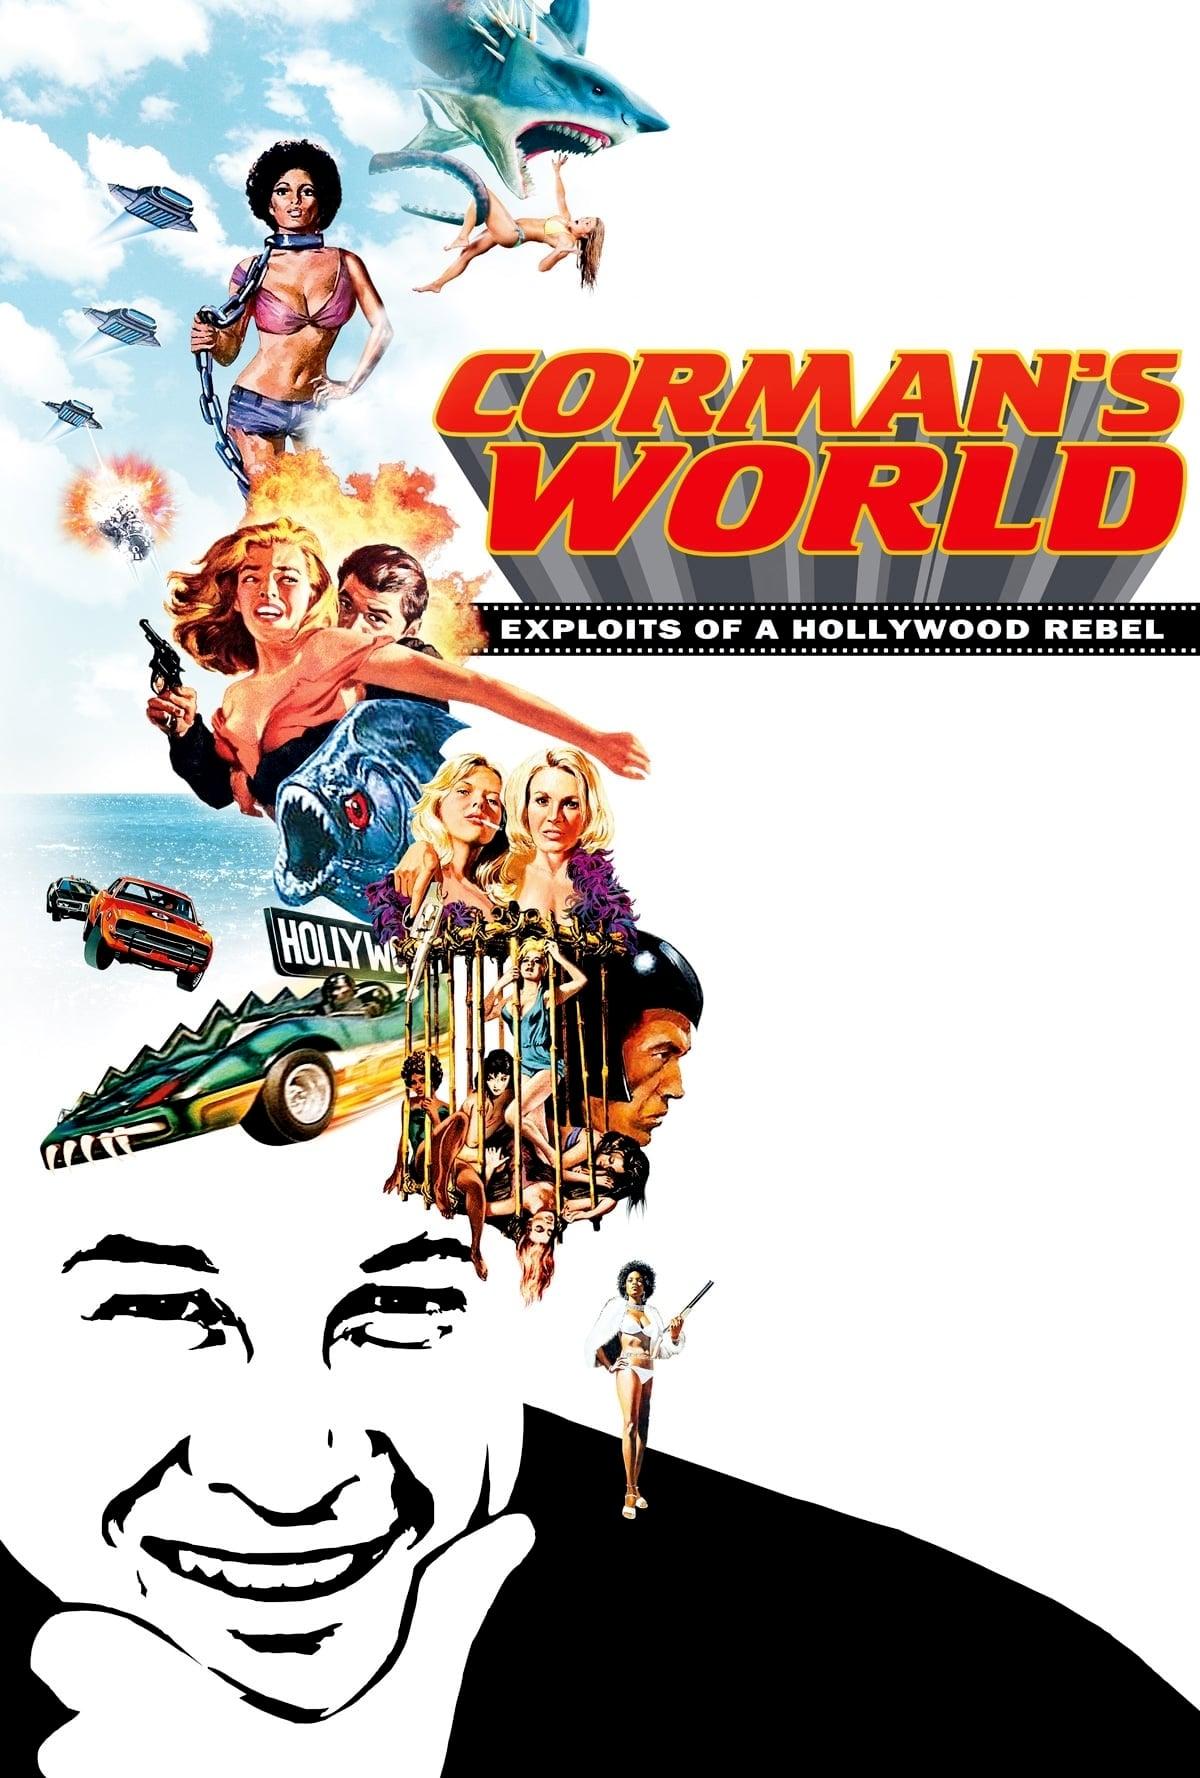 Corman's World poster